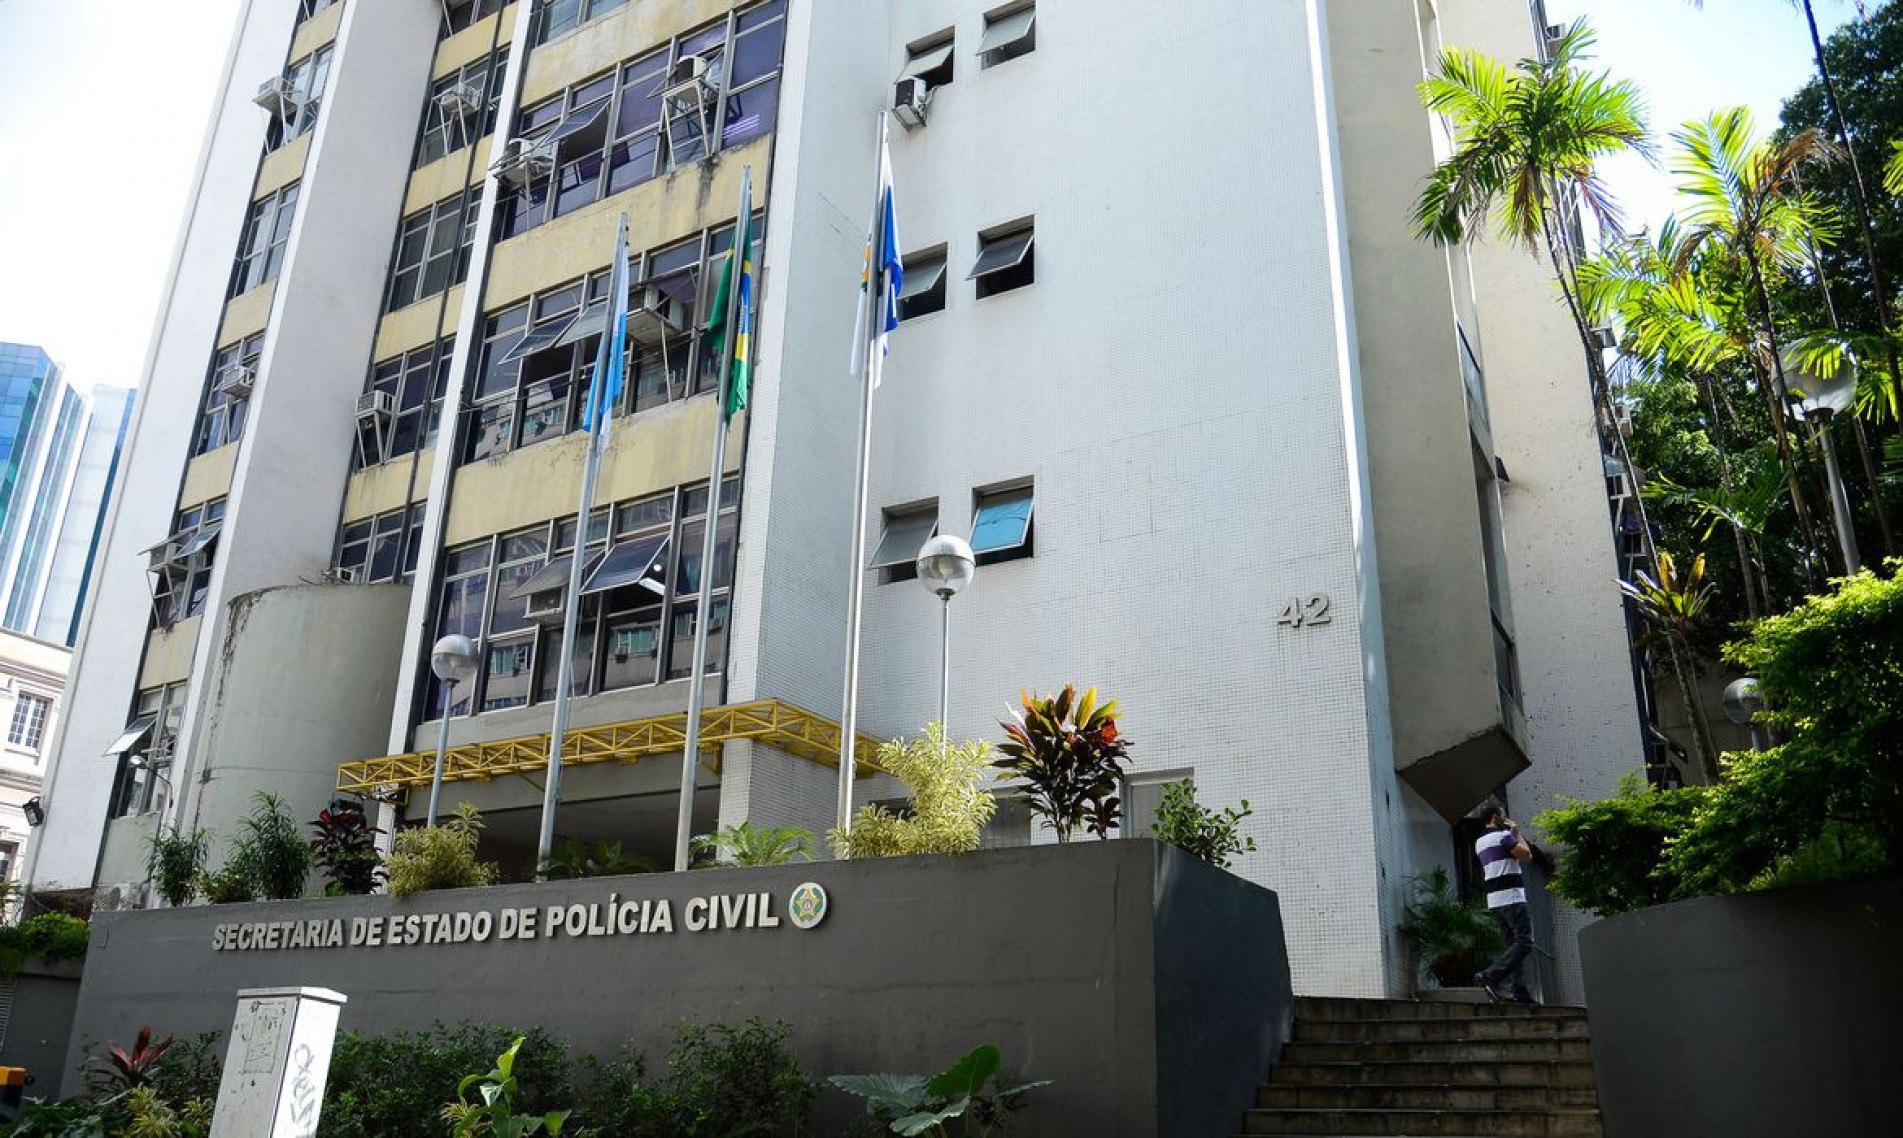  Fachada da Secretaria de Estado da Pol..cia Civil, no centro do Rio de Janeiro
    